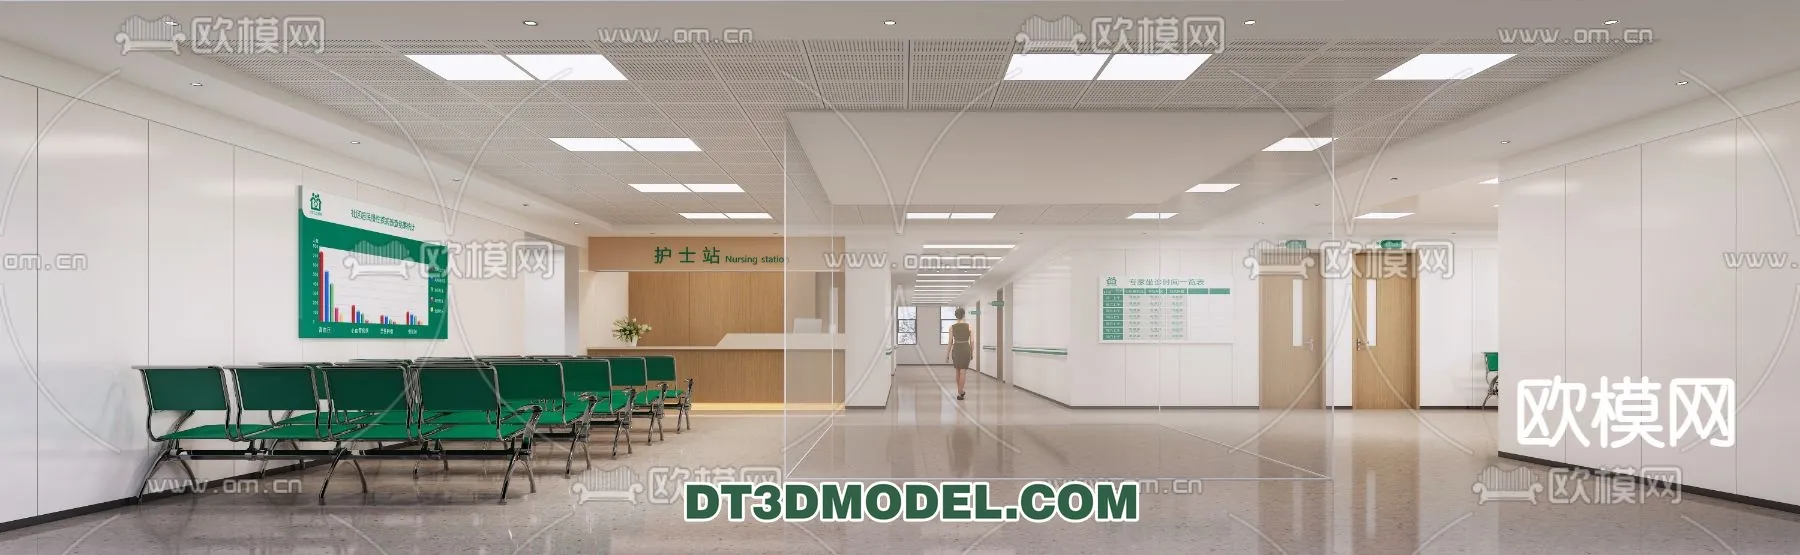 HOSPITAL 3D SCENES – MODERN – 0166